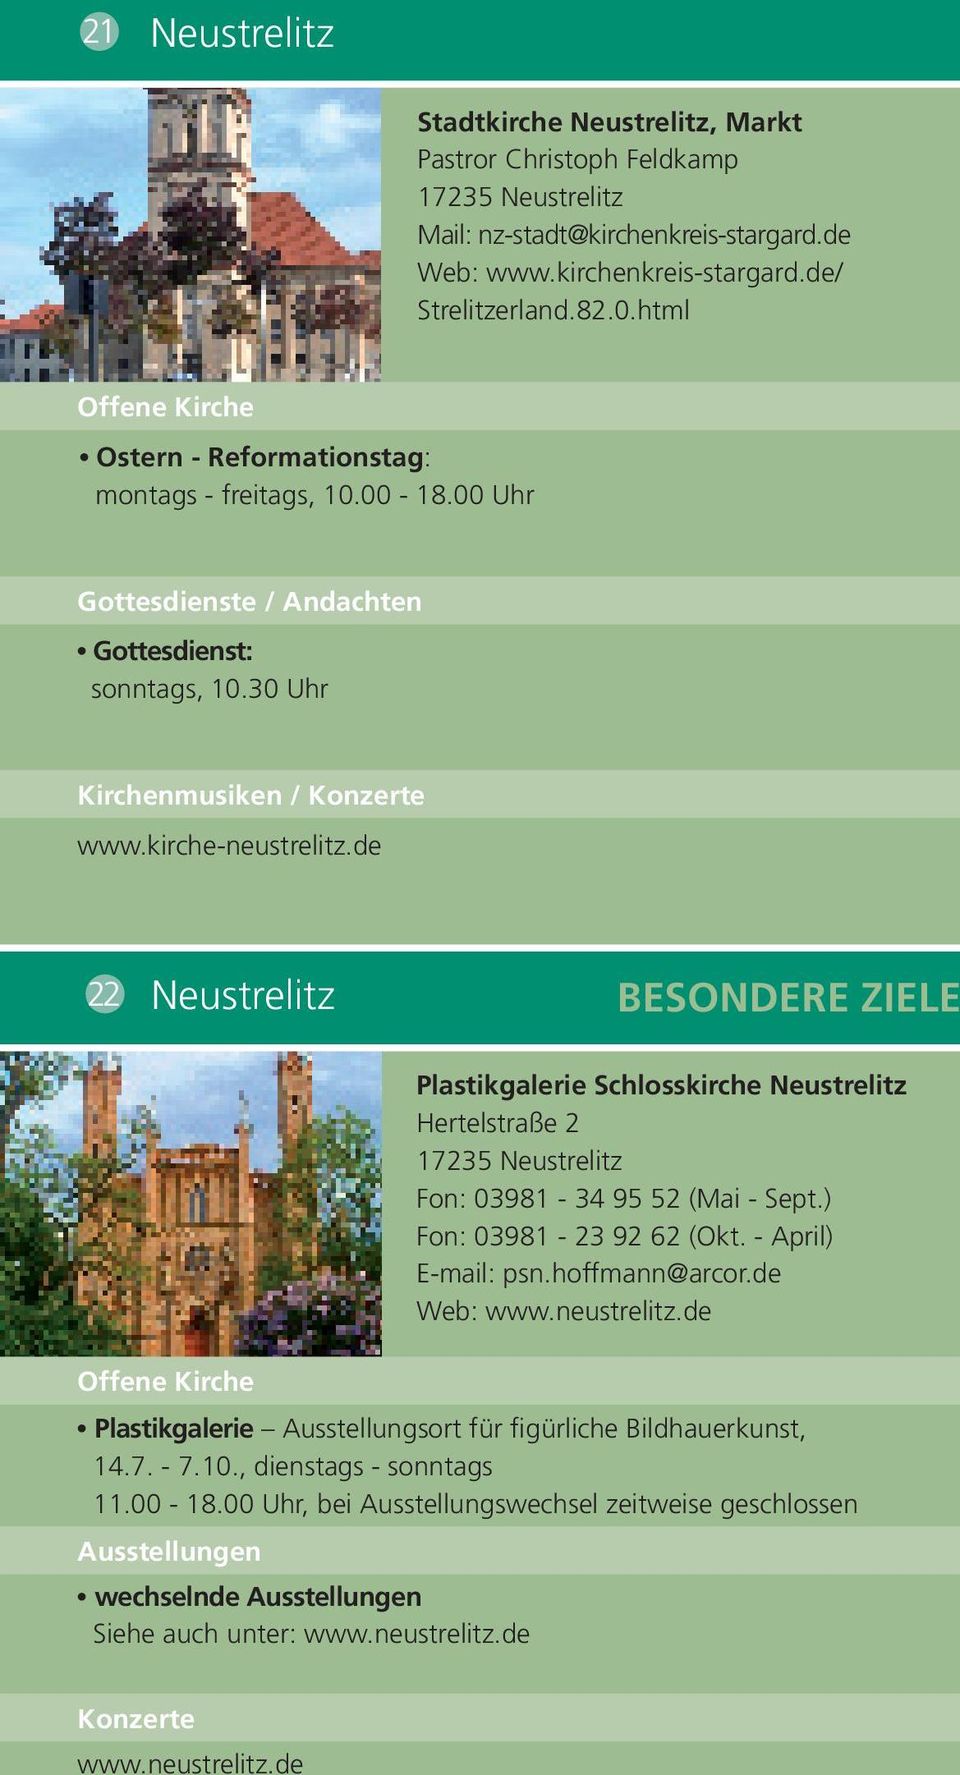 de 22 Neustrelitz BESONDERE ZIELE Plastikgalerie Schlosskirche Neustrelitz Hertelstraße 2 17235 Neustrelitz Fon: 03981-34 95 52 (Mai - Sept.) Fon: 03981-23 92 62 (Okt. - April) E-mail: psn.